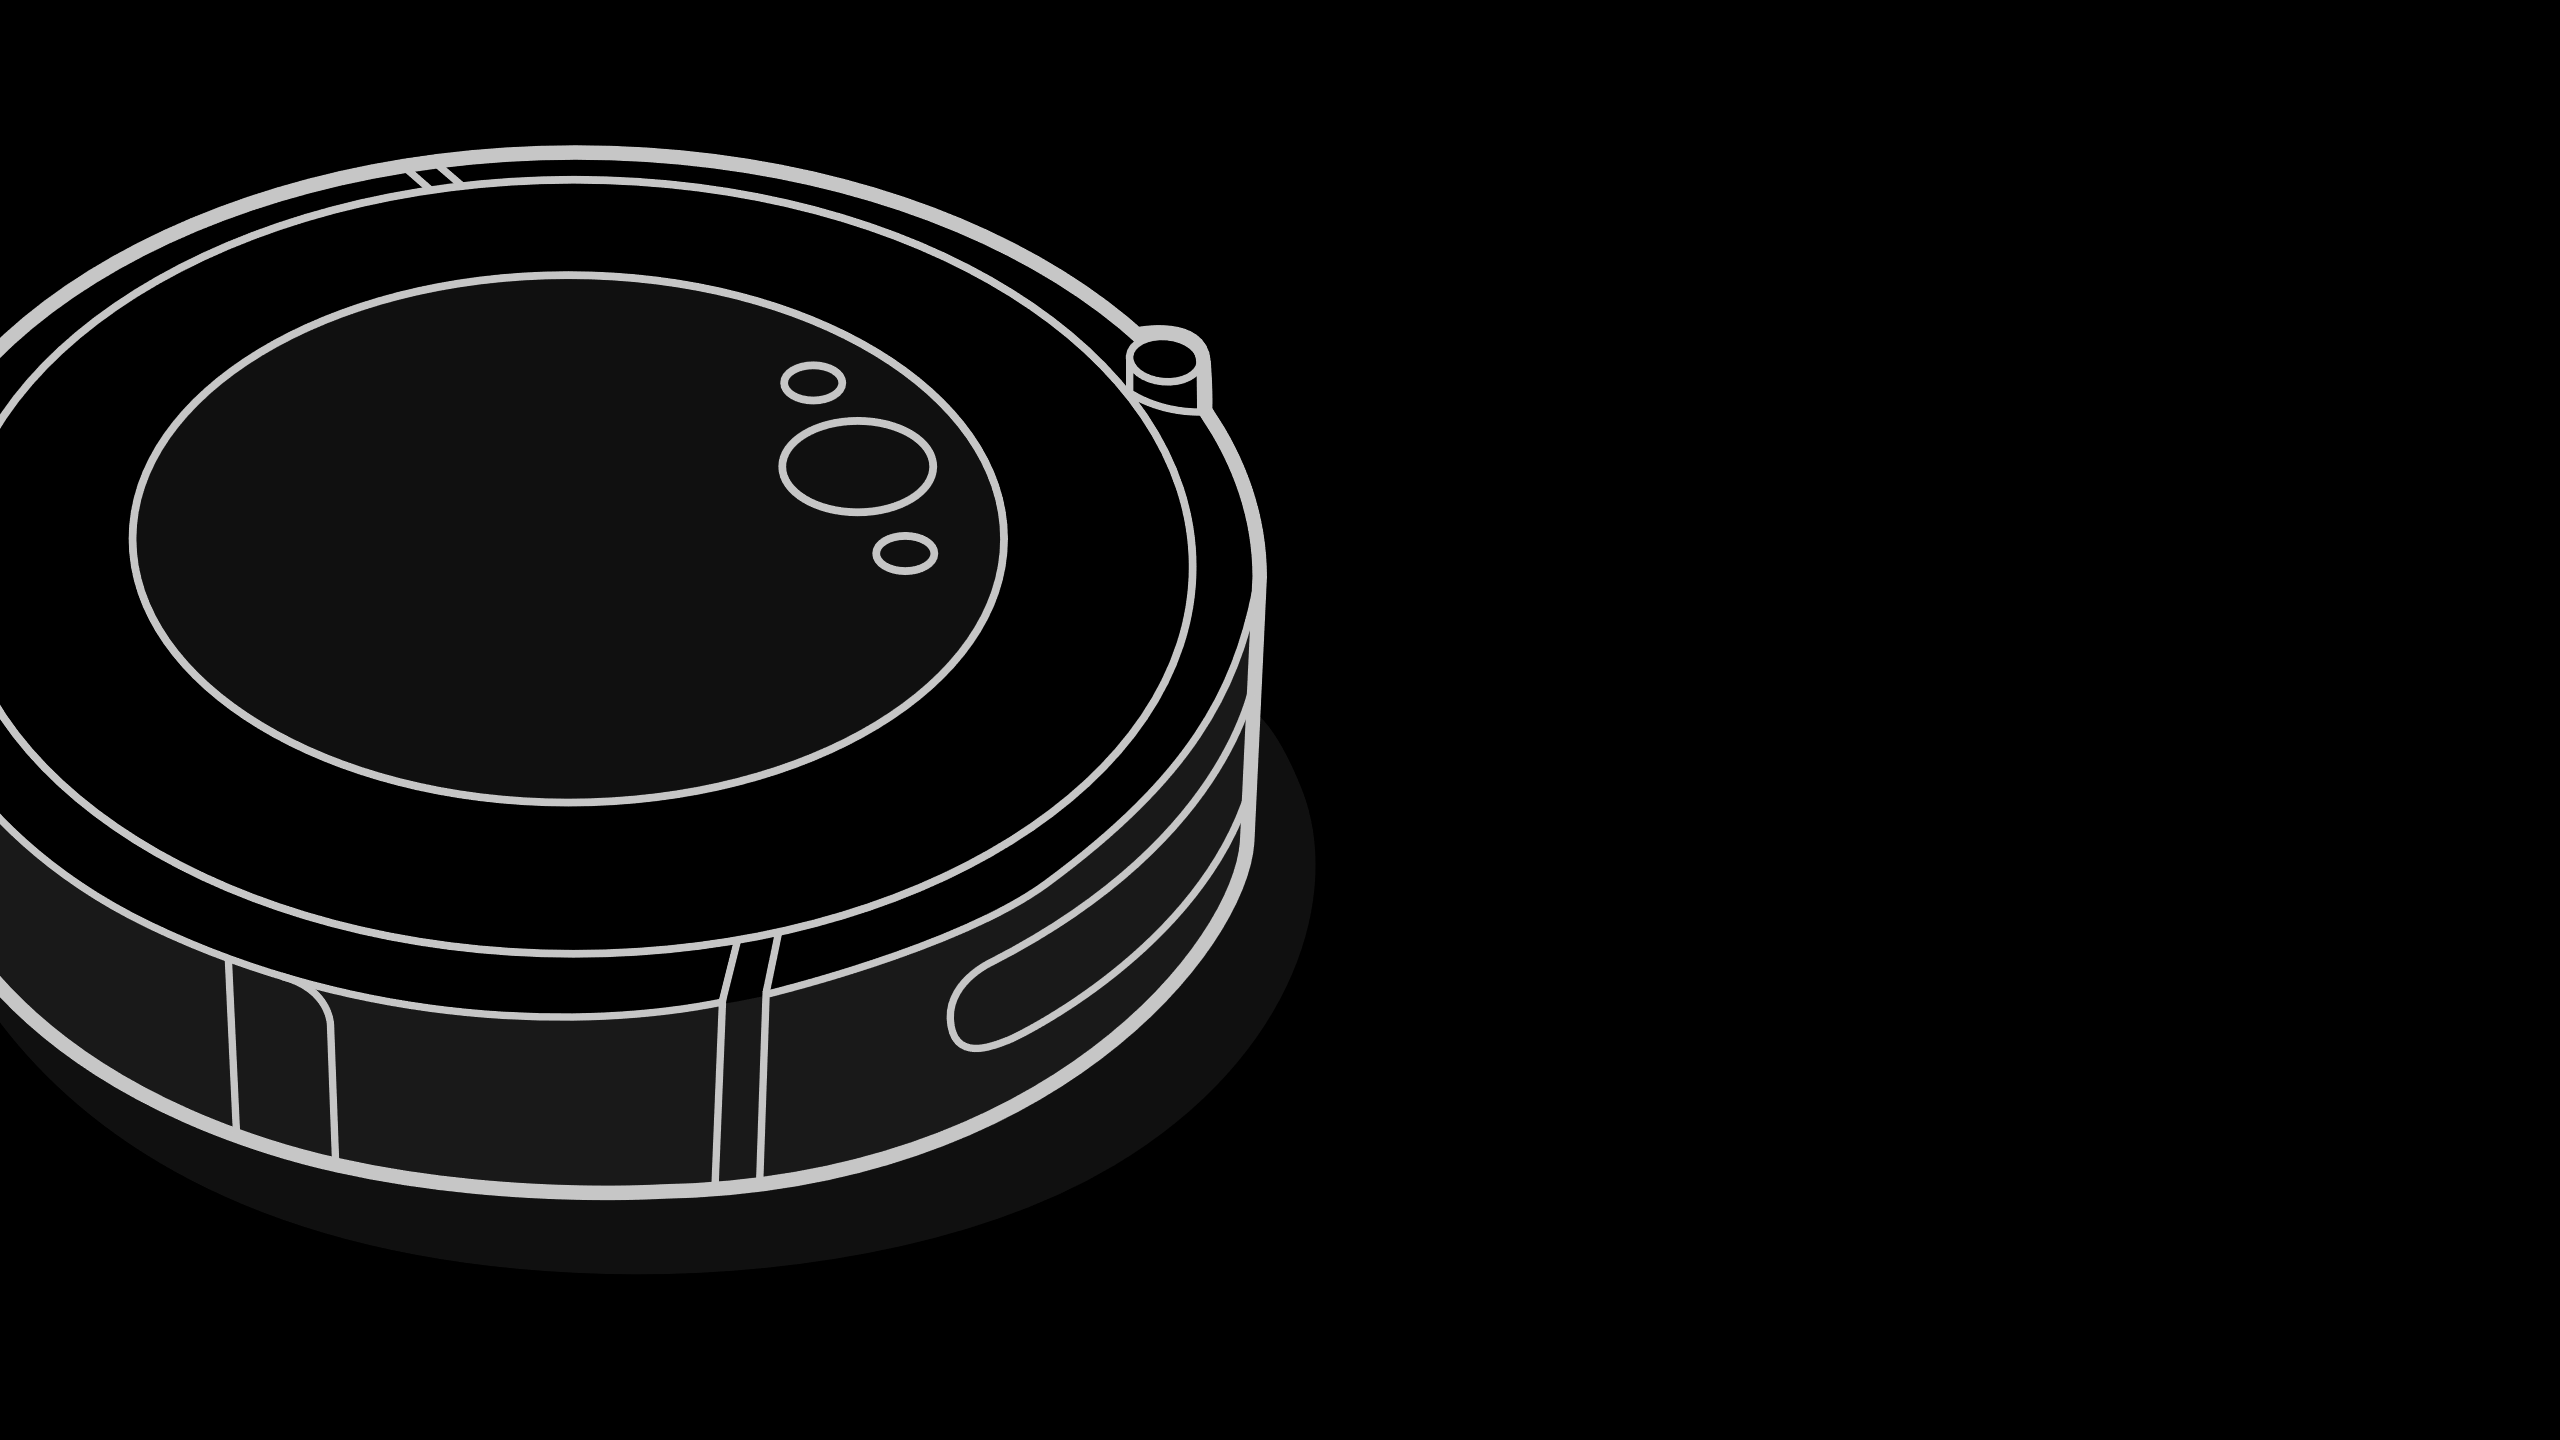 General 2560x1440 Roomba vacuum cleaner robot technology black background simple background minimalism digital art